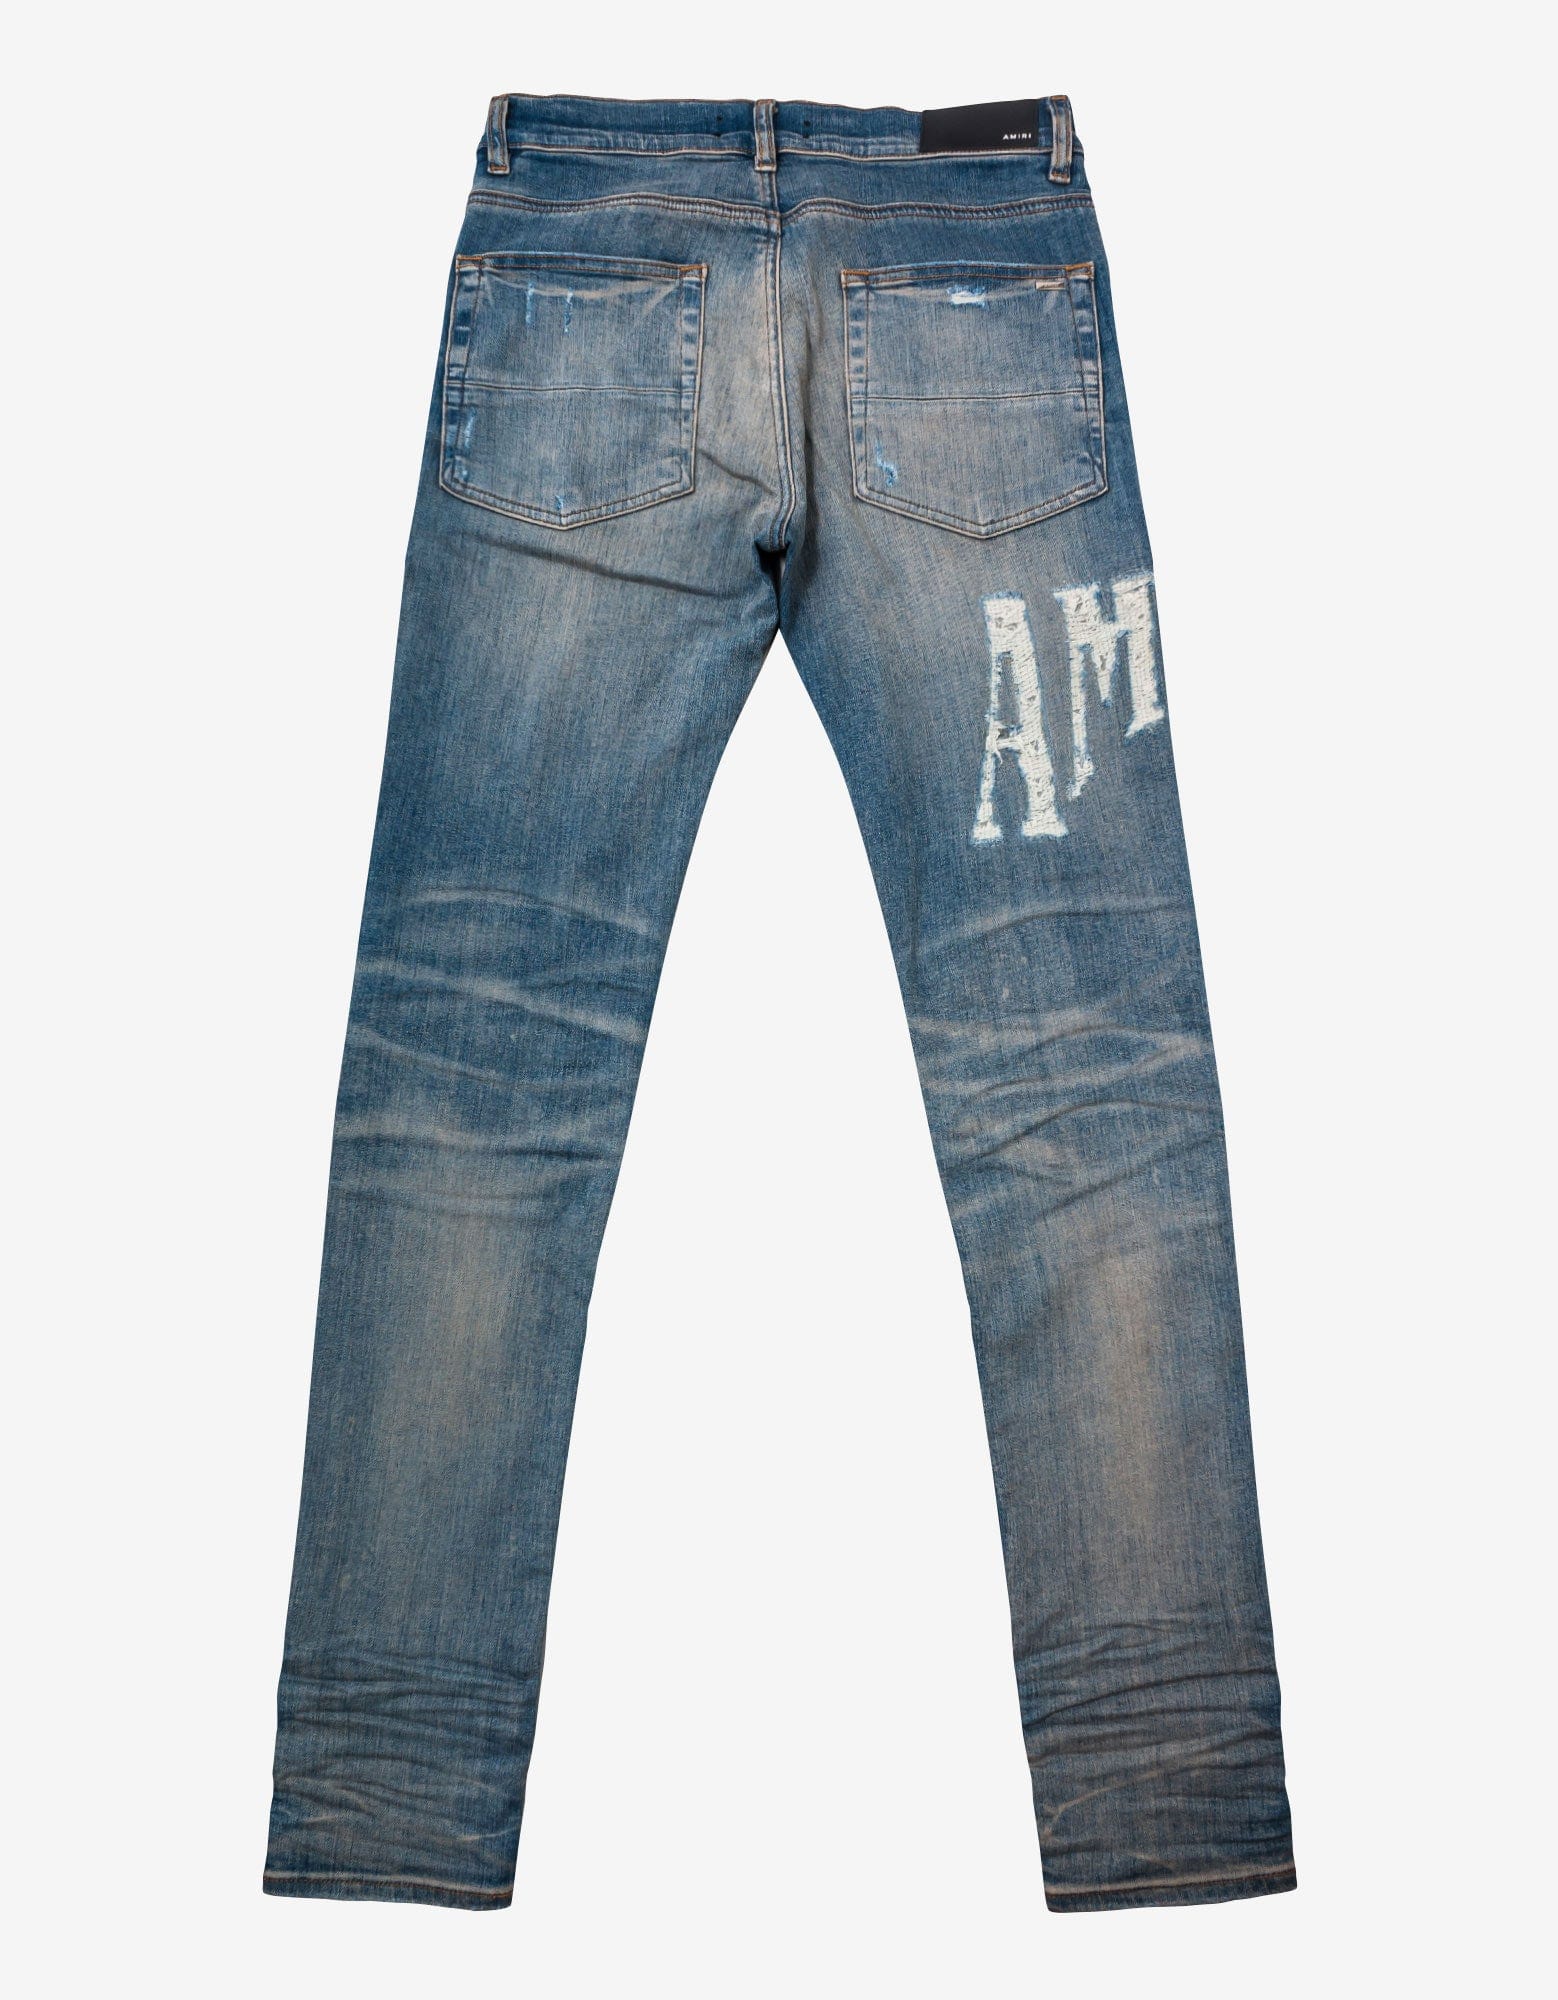 amiri jeans thrasher 29 AMIRI 黒スキニー アミリ アウトレット 商品 